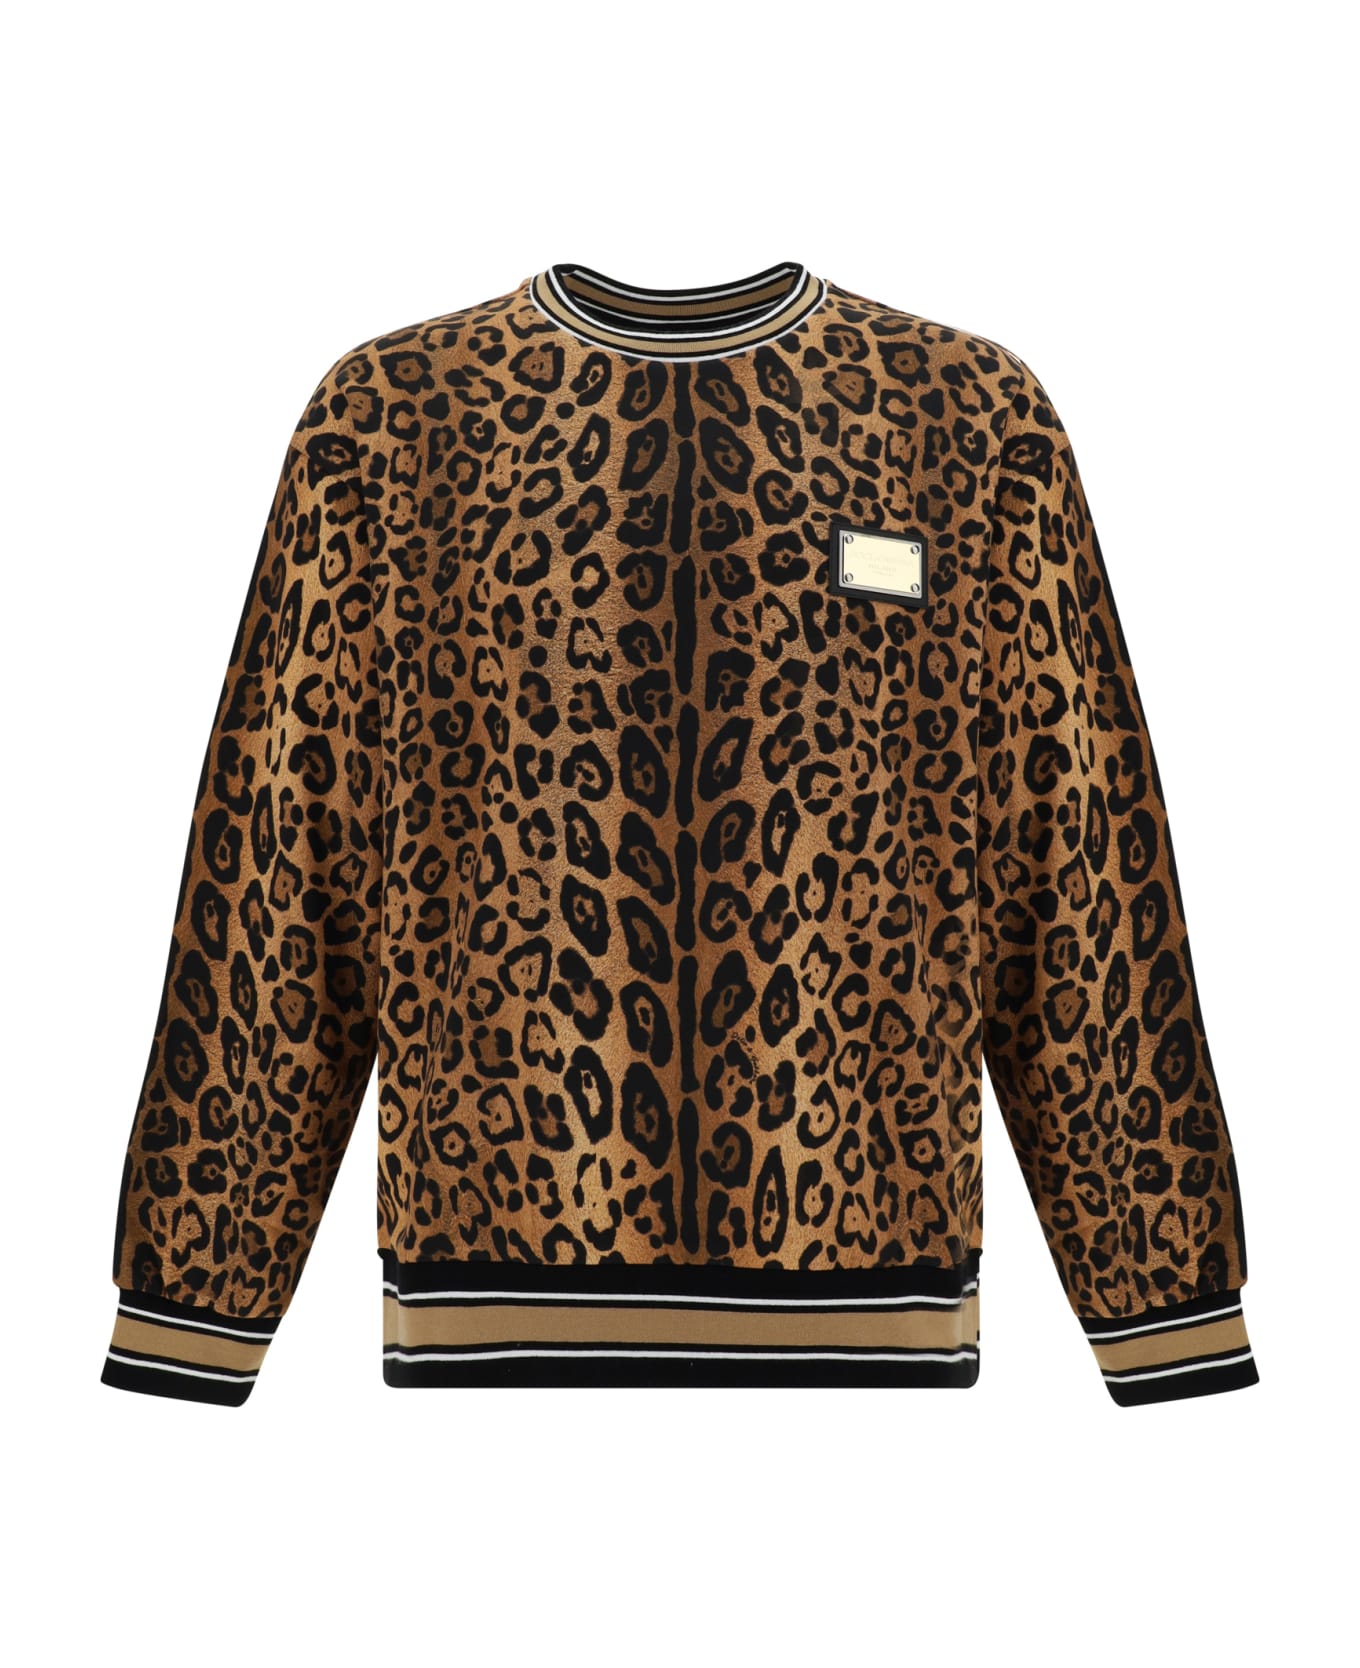 Dolce & Gabbana Leopard Print Sweatshirt - Dolce & Gabbana lace clutch bag